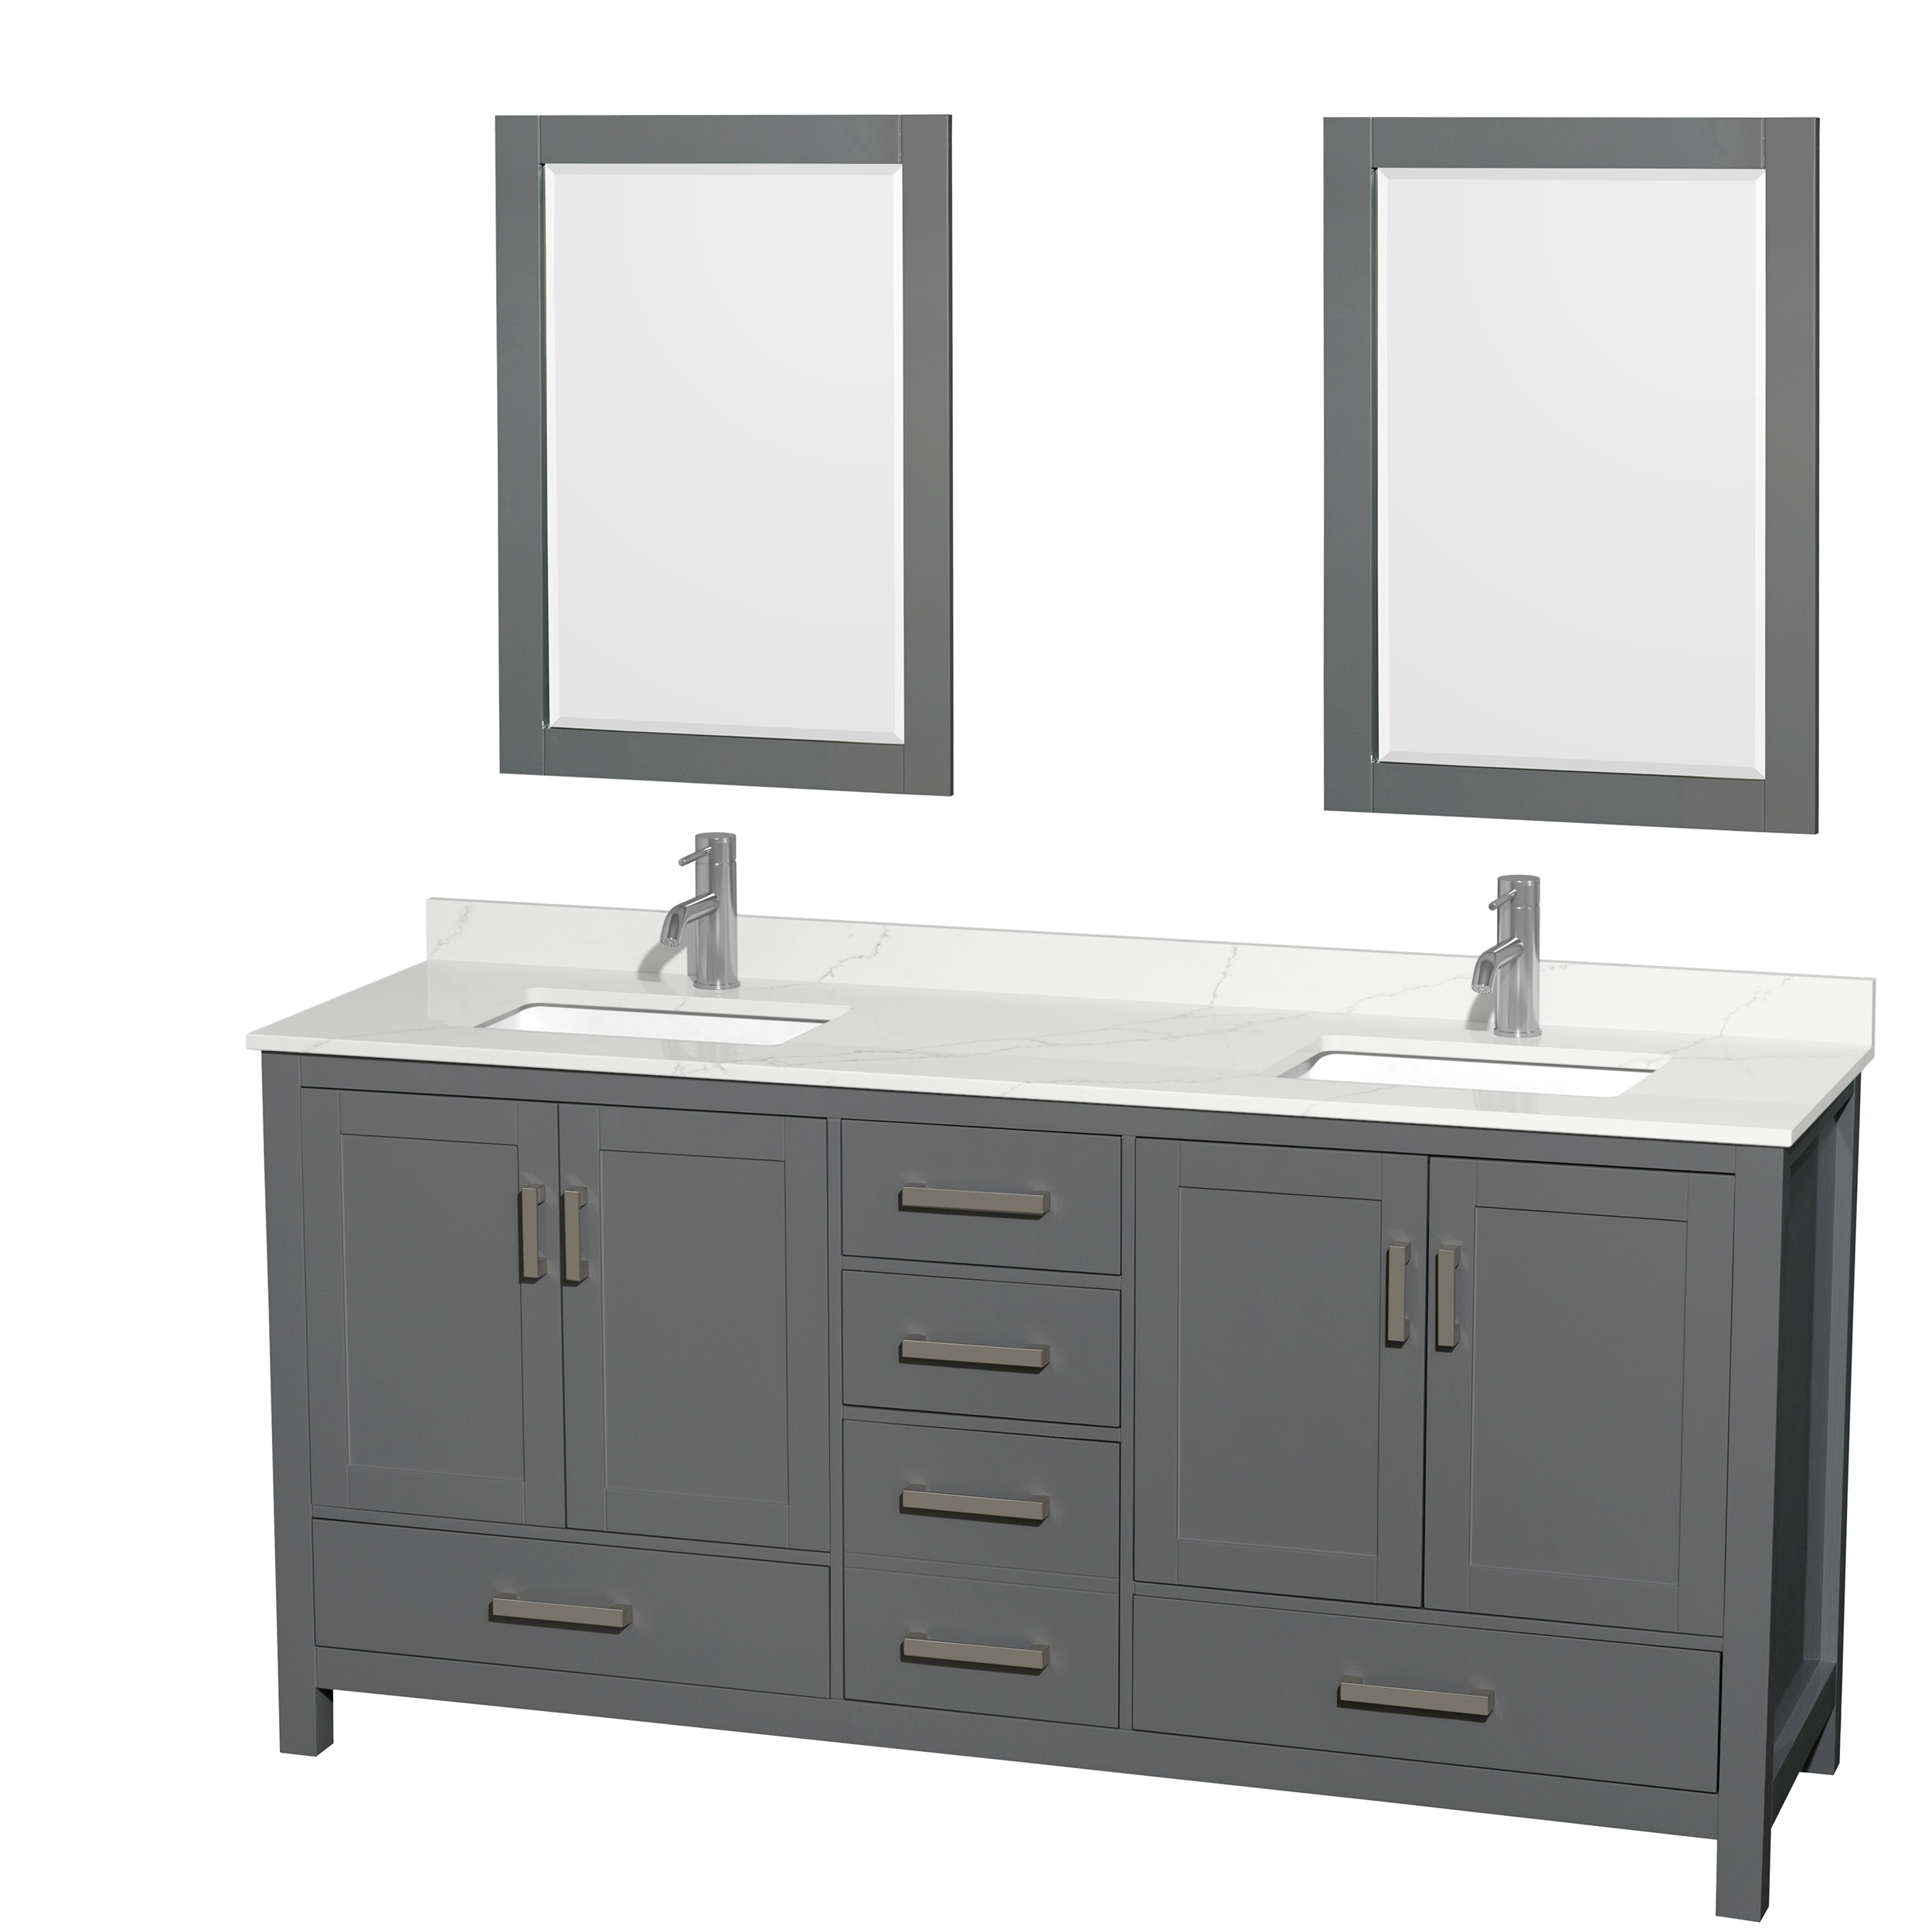 sheffield 72" double bathroom vanity by wyndham collection - dark gray